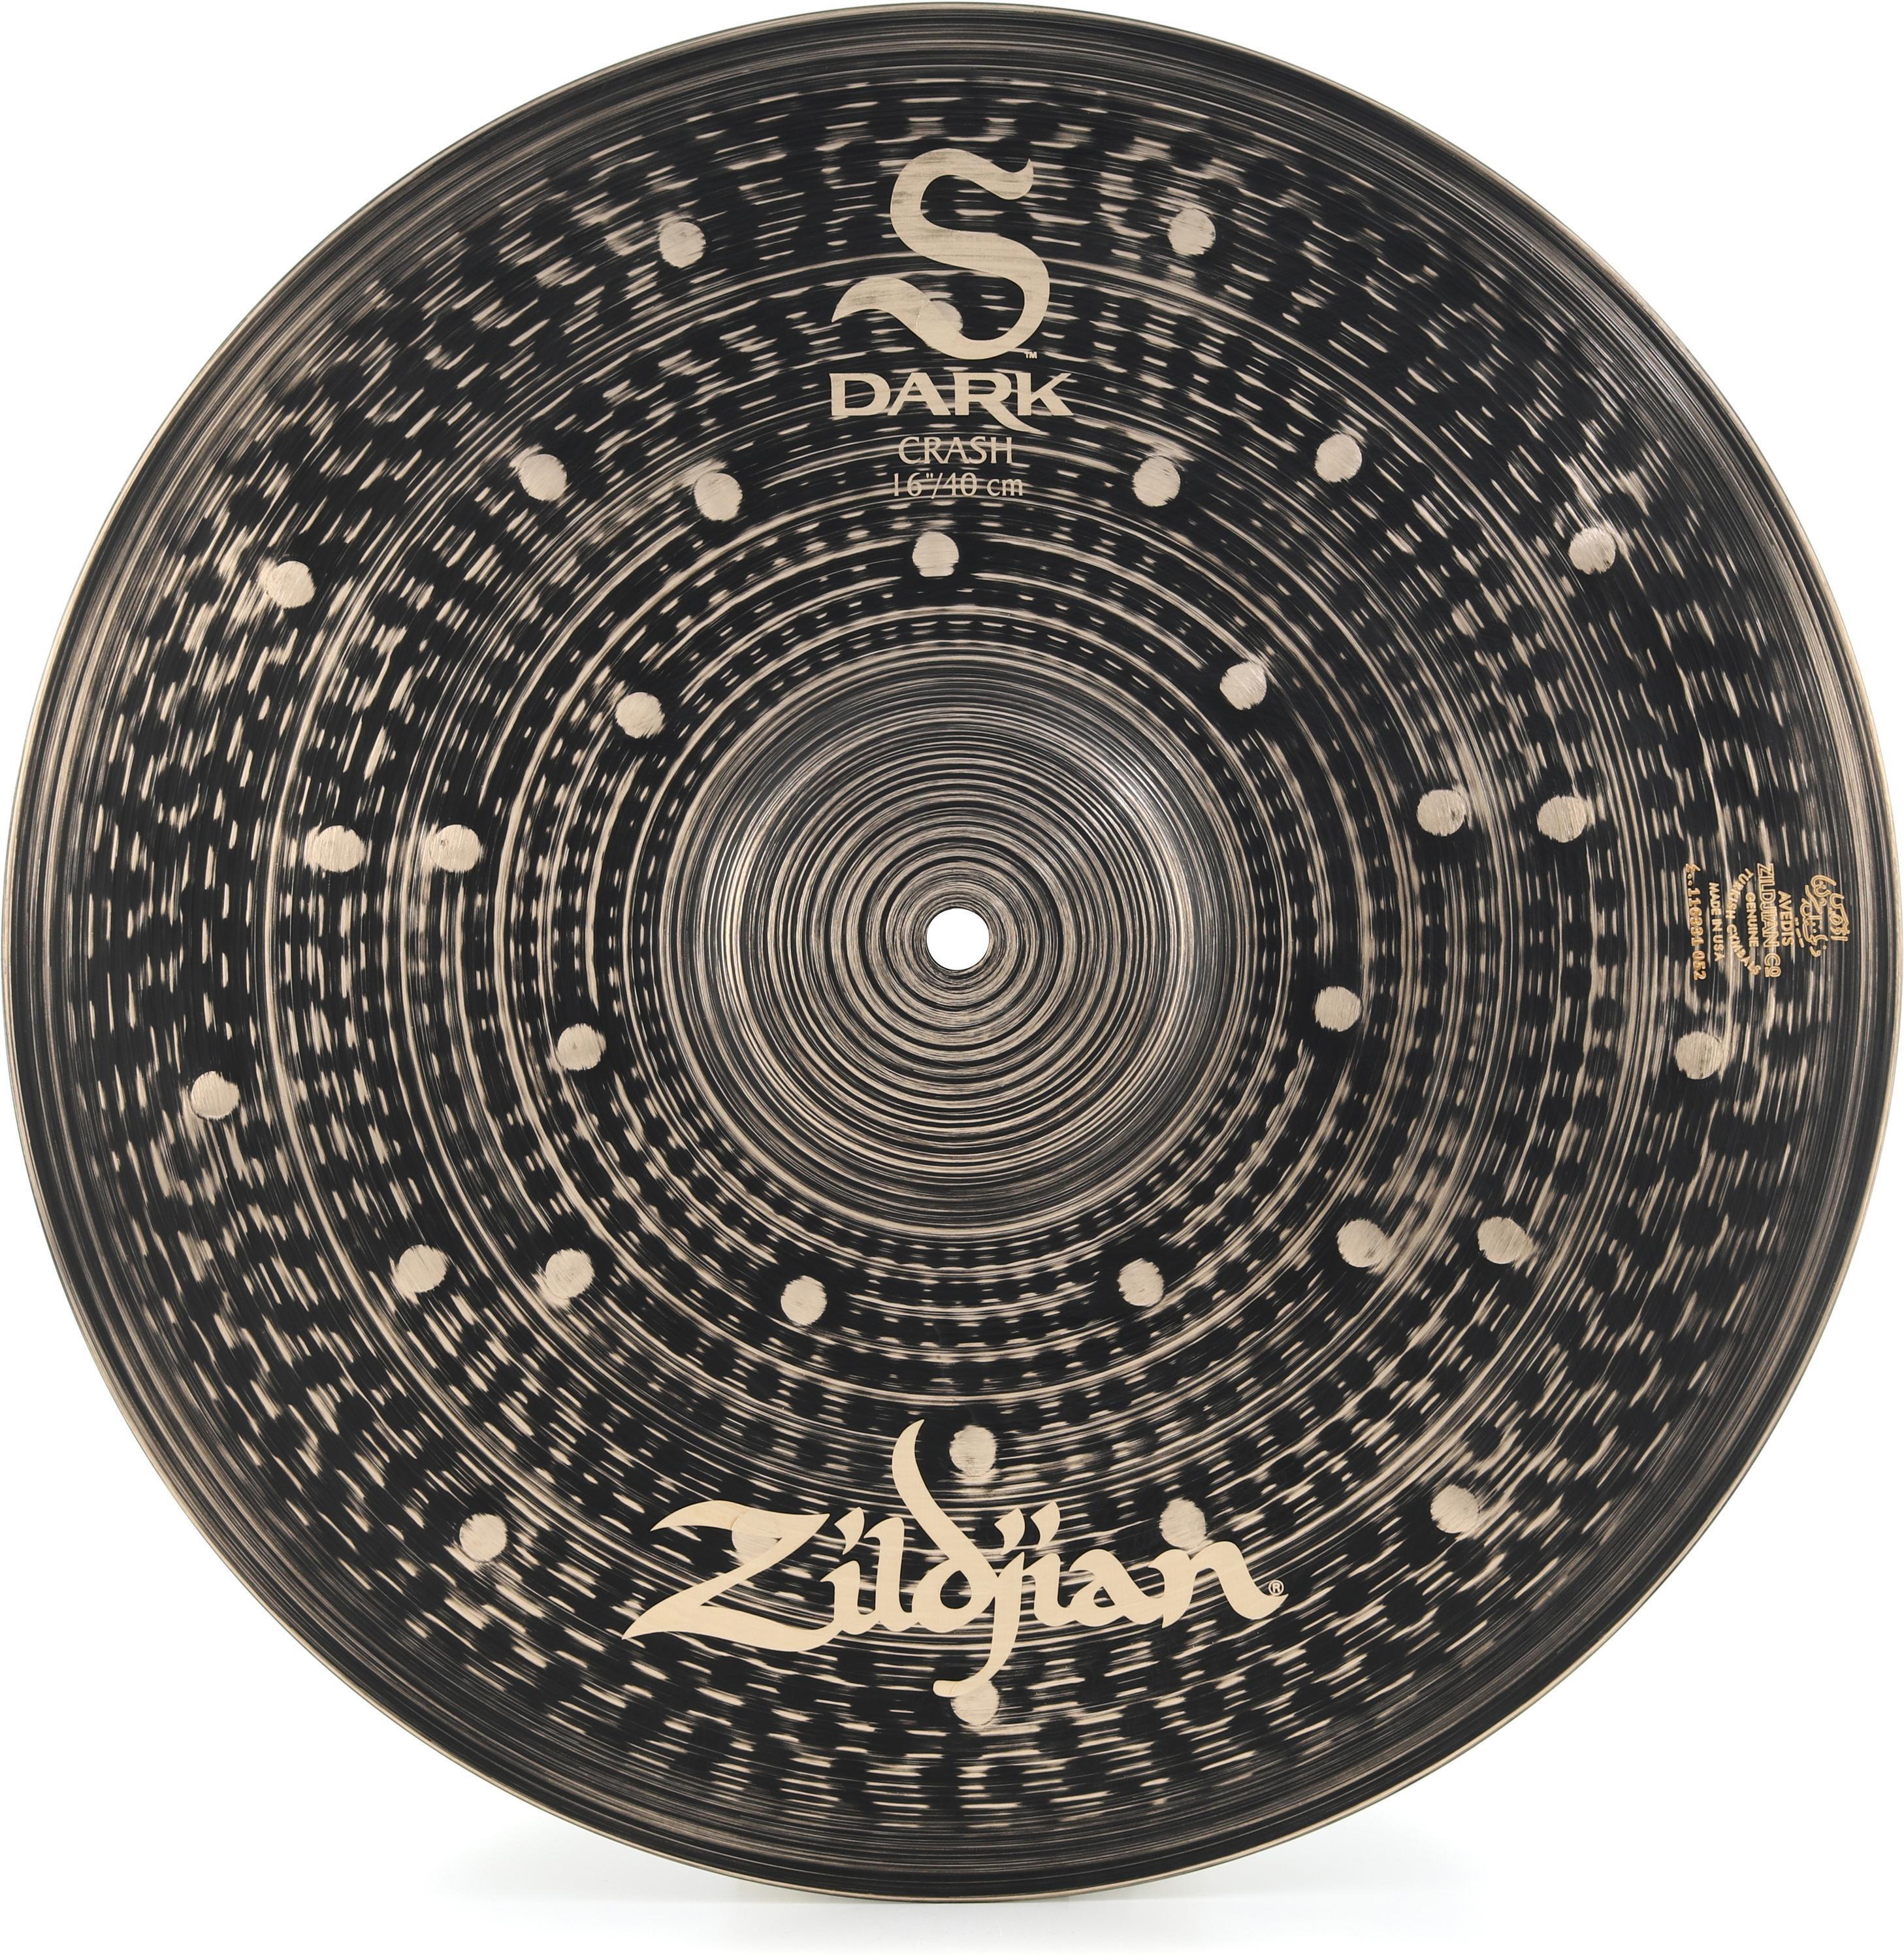 Zildjian S Dark Crash Cymbal - 16 inch | Sweetwater